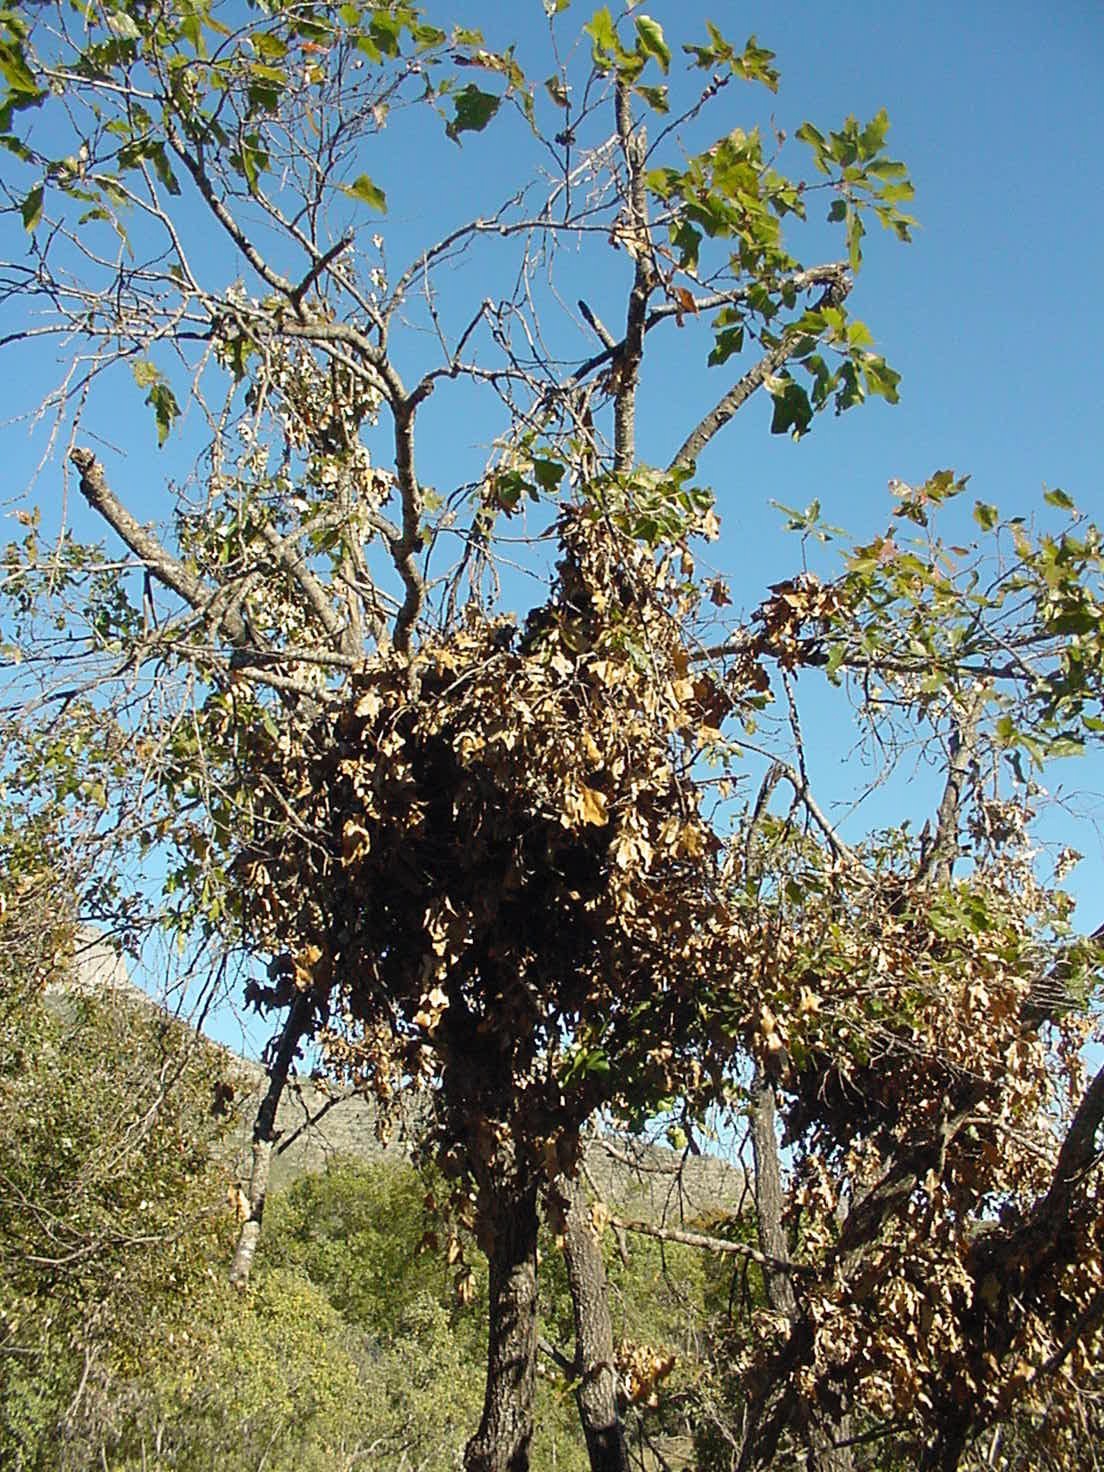 American black bear_U americanus Cohuila Mexico_nest formed by feeding in oak tree_D Doan-Crider